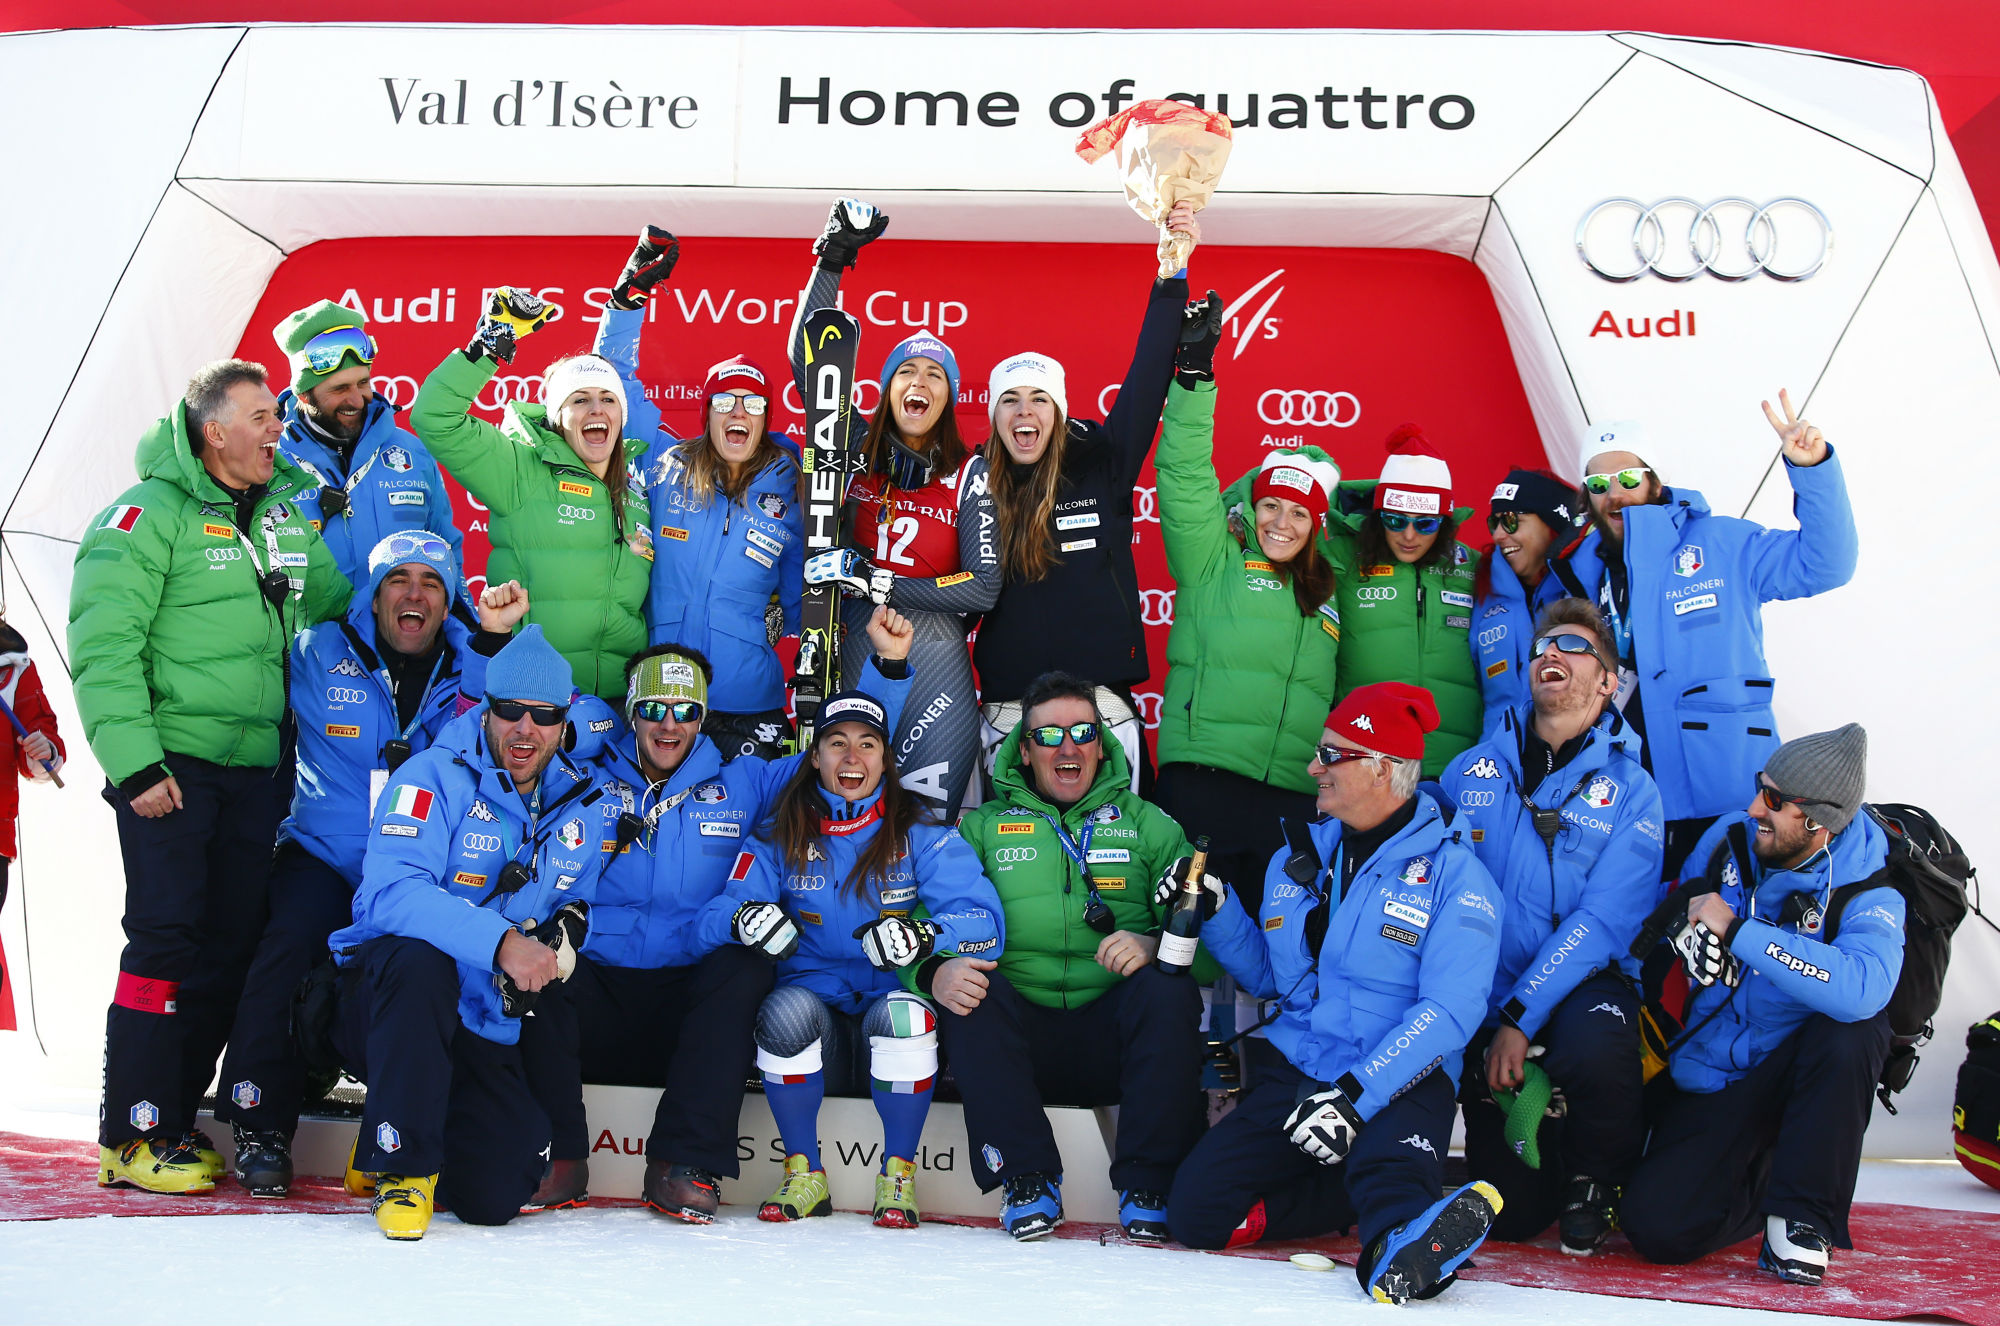 Festa azzurra sul podio in Val d'Isere (@Zoom agence)